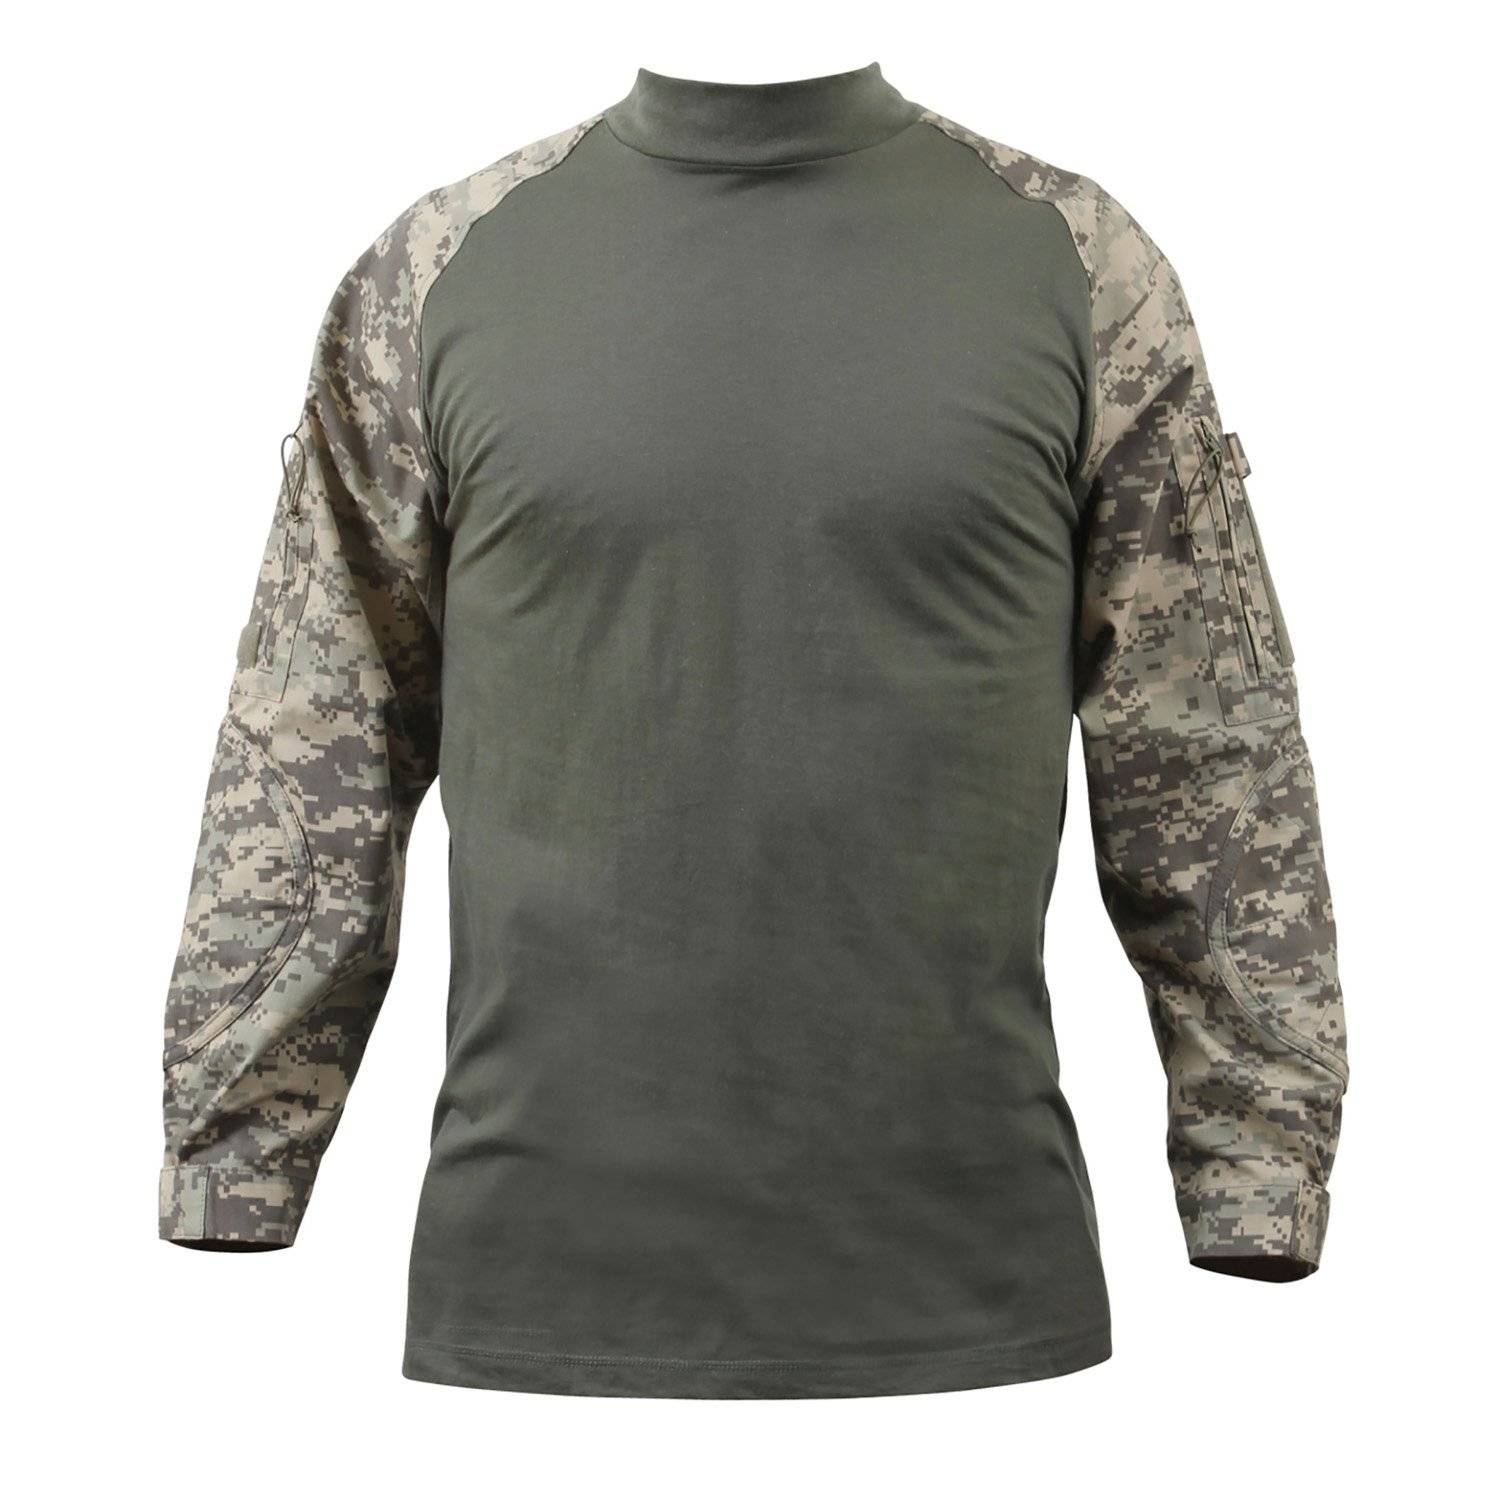 US AT Digital Shirt Acu Ucp Army Usmc Military Uniform Outdoort tarnshirt shirt 